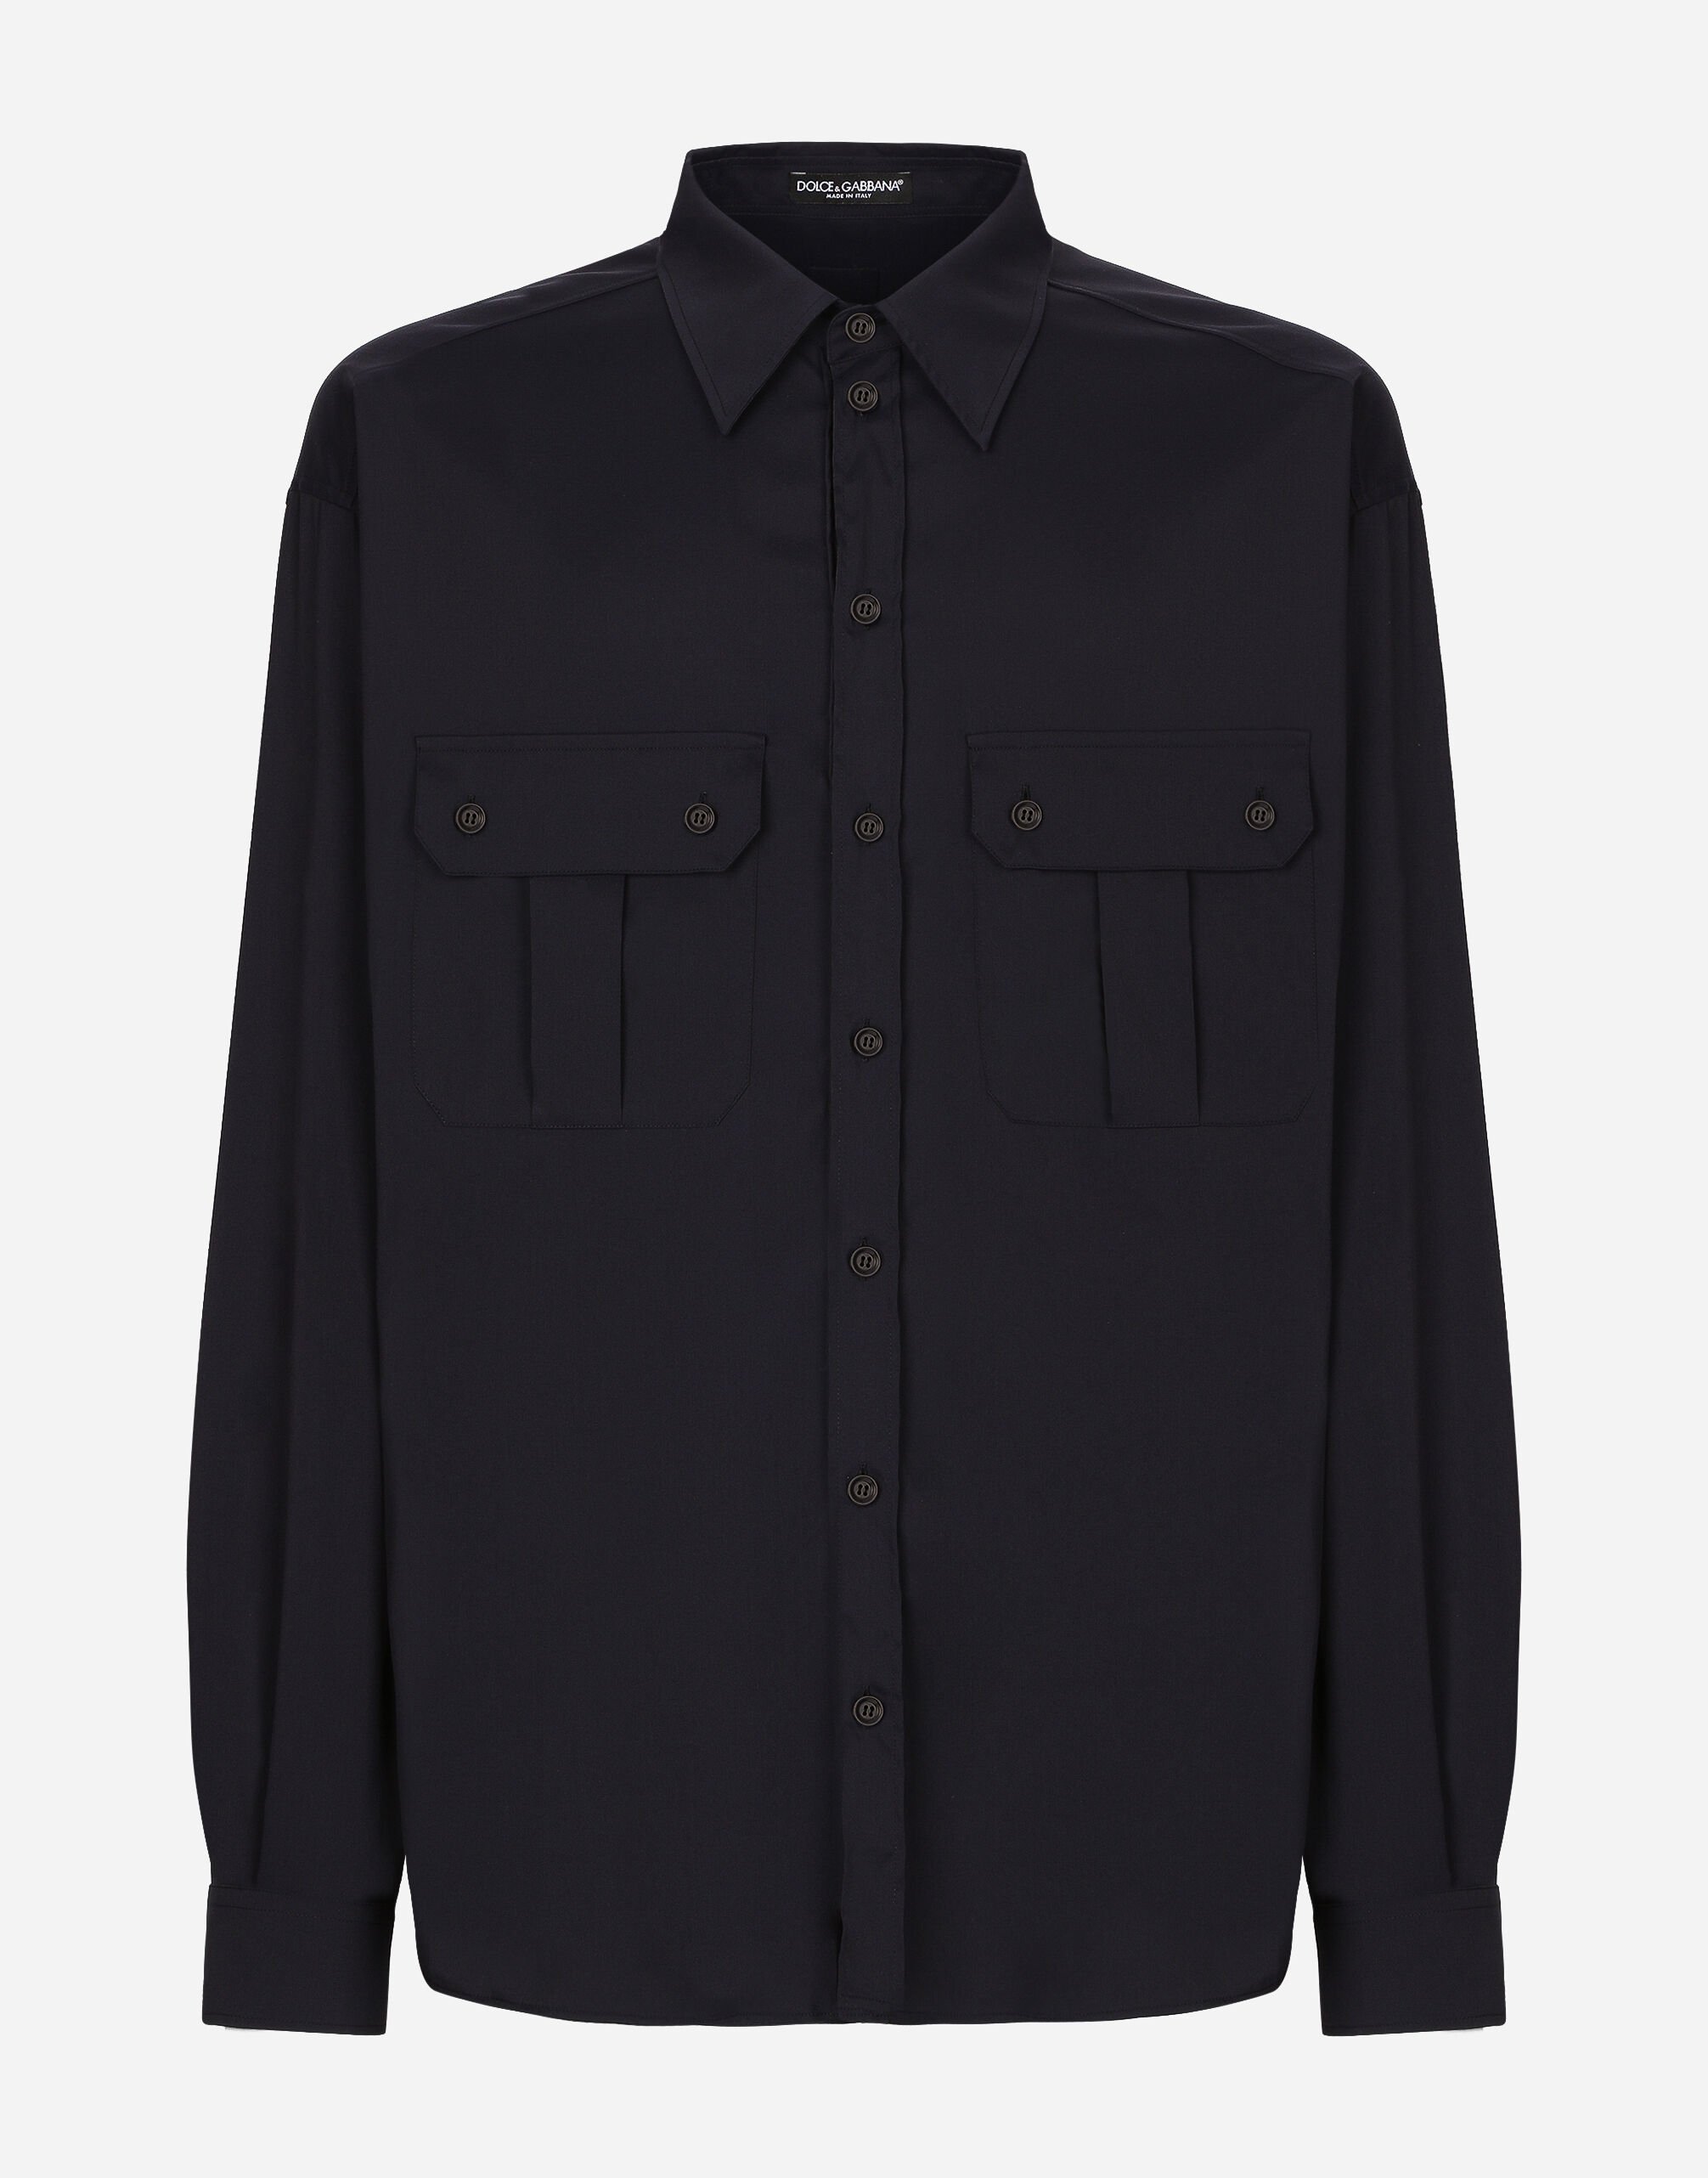 Dolce & Gabbana Technical fabric shirt with pockets Black G8PL4TG7F2H